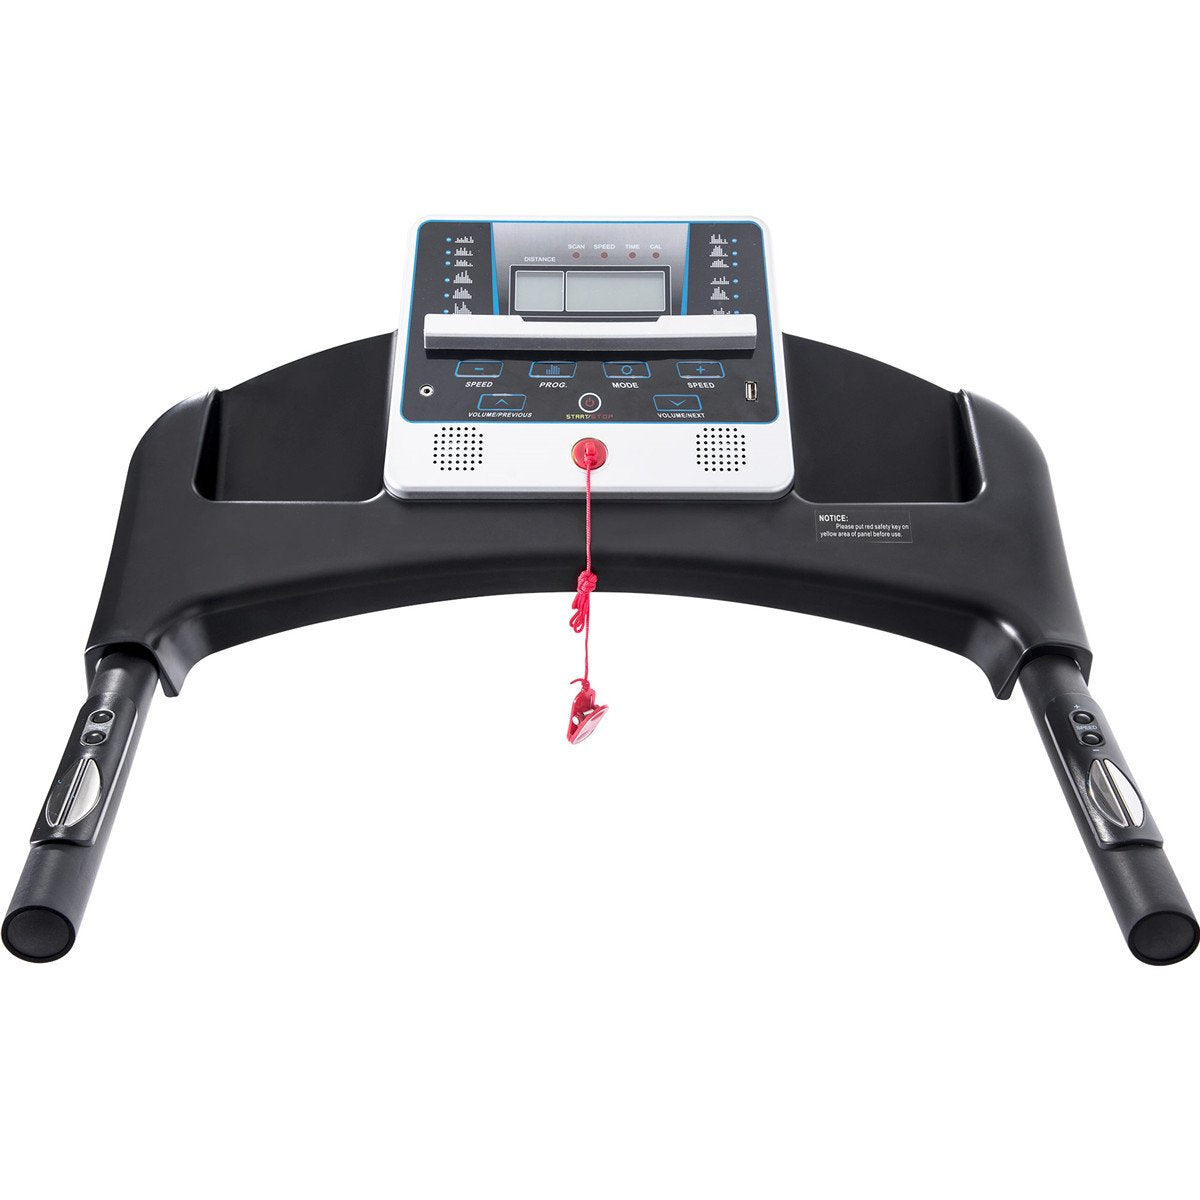 Electric Folding Treadmill Motorized Running Machine | Device Holder | Audio Speaker